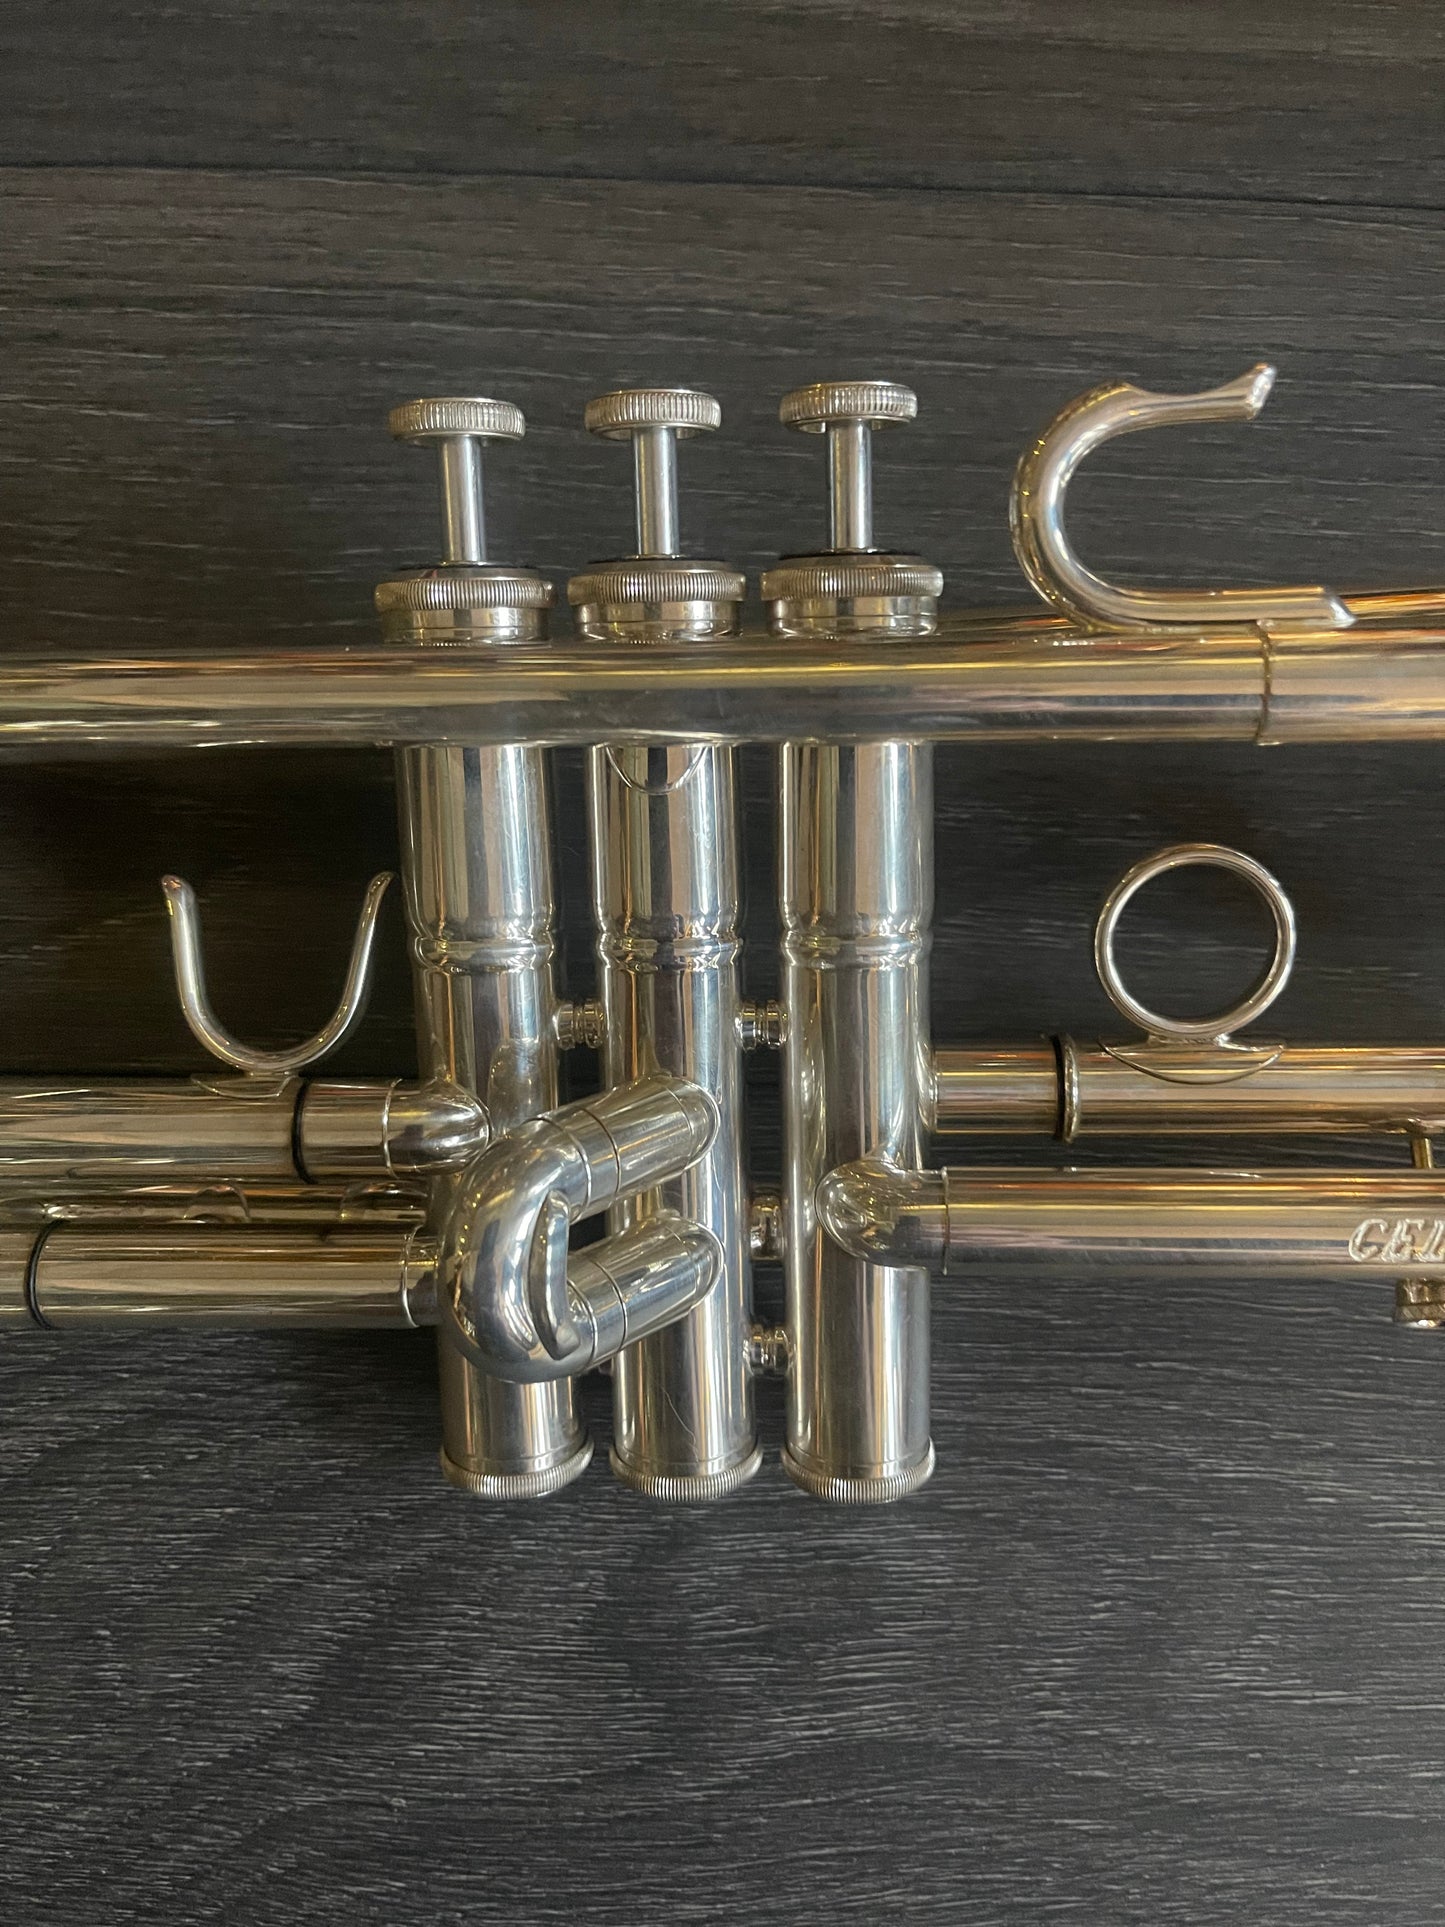 Eclipse Celeste Bb Trumpet Silver Plate #855